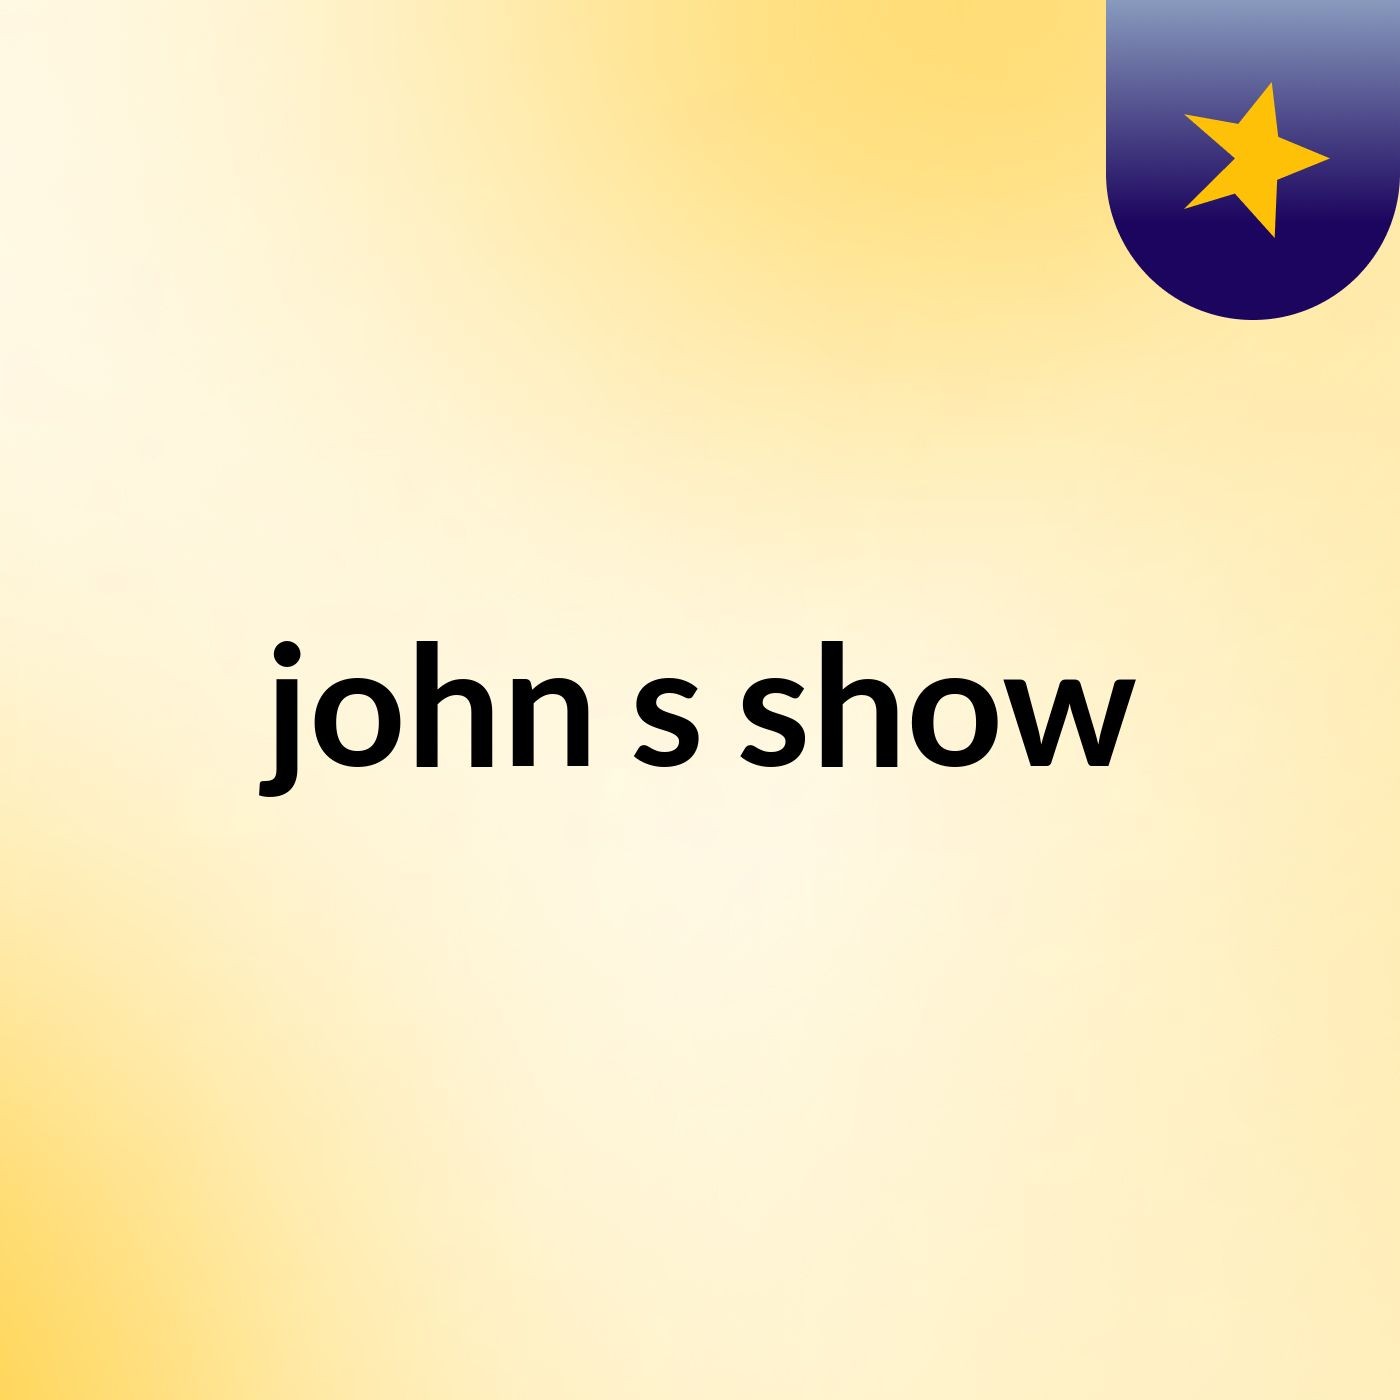 john's show